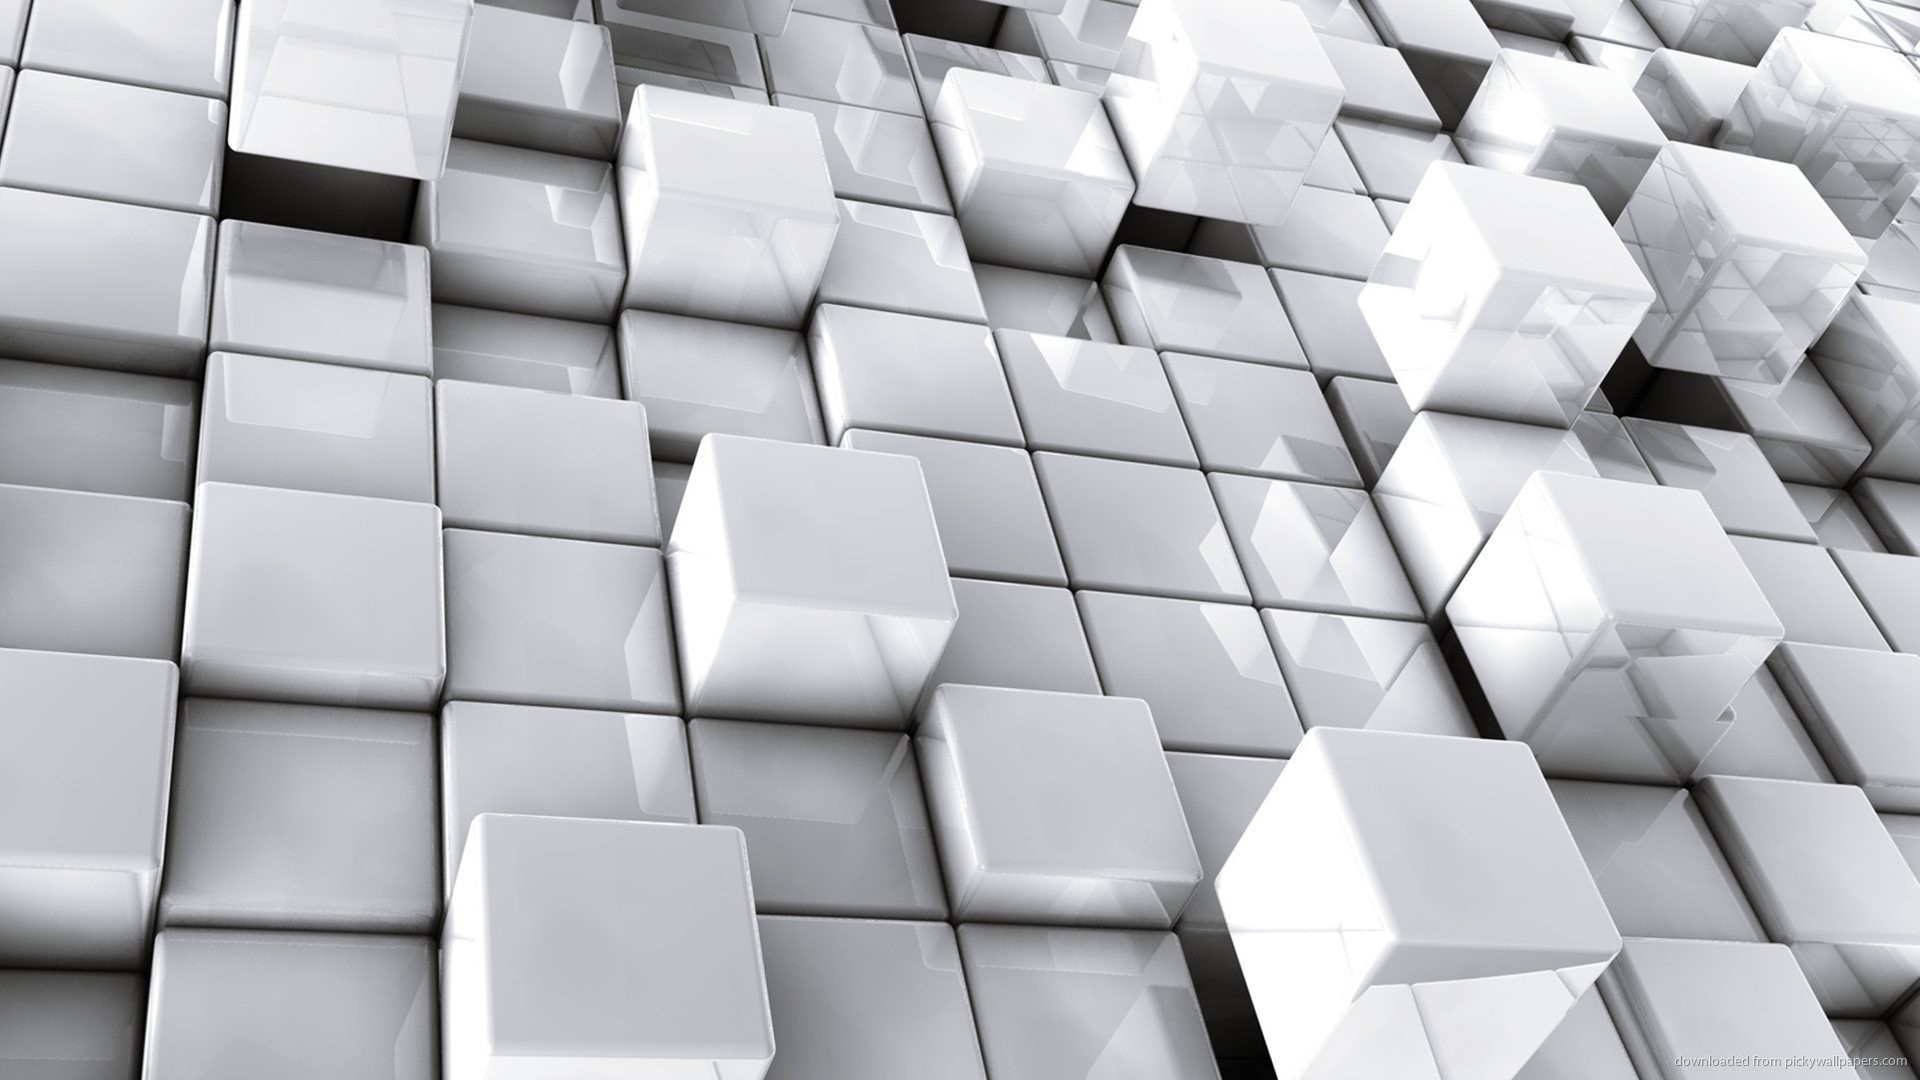 1920x1080 Abstract White 3D Cubes Desktop Wallpaper picture